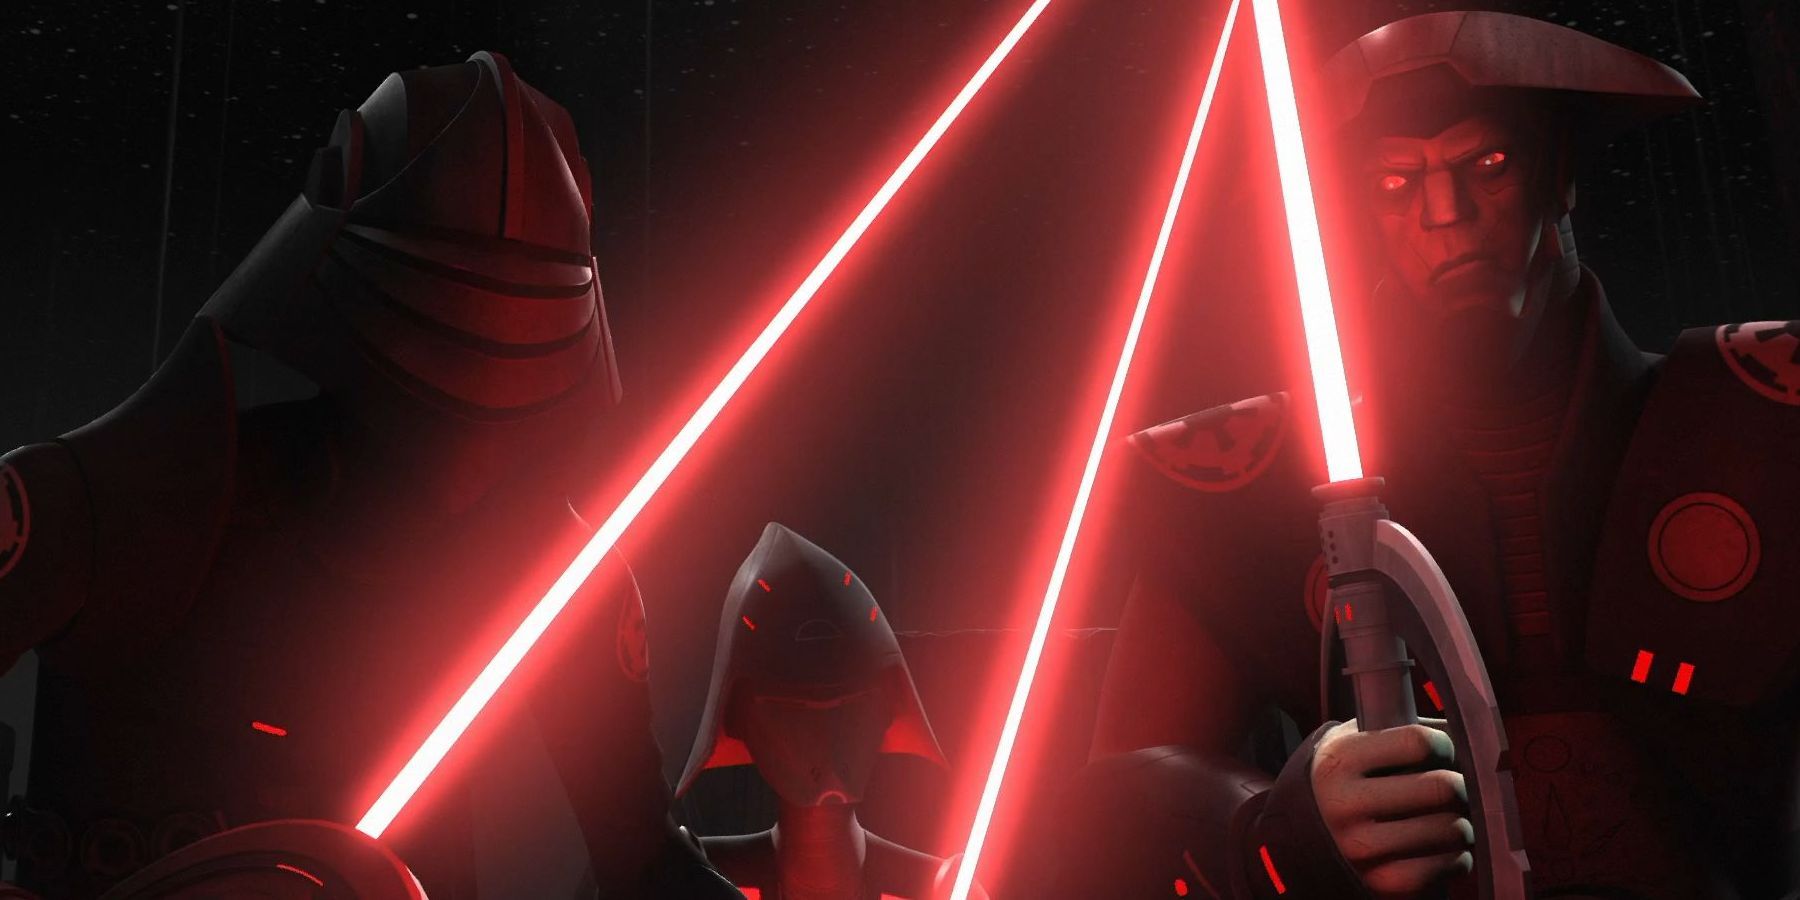 Three Inquisitors from Star Wars Rebels